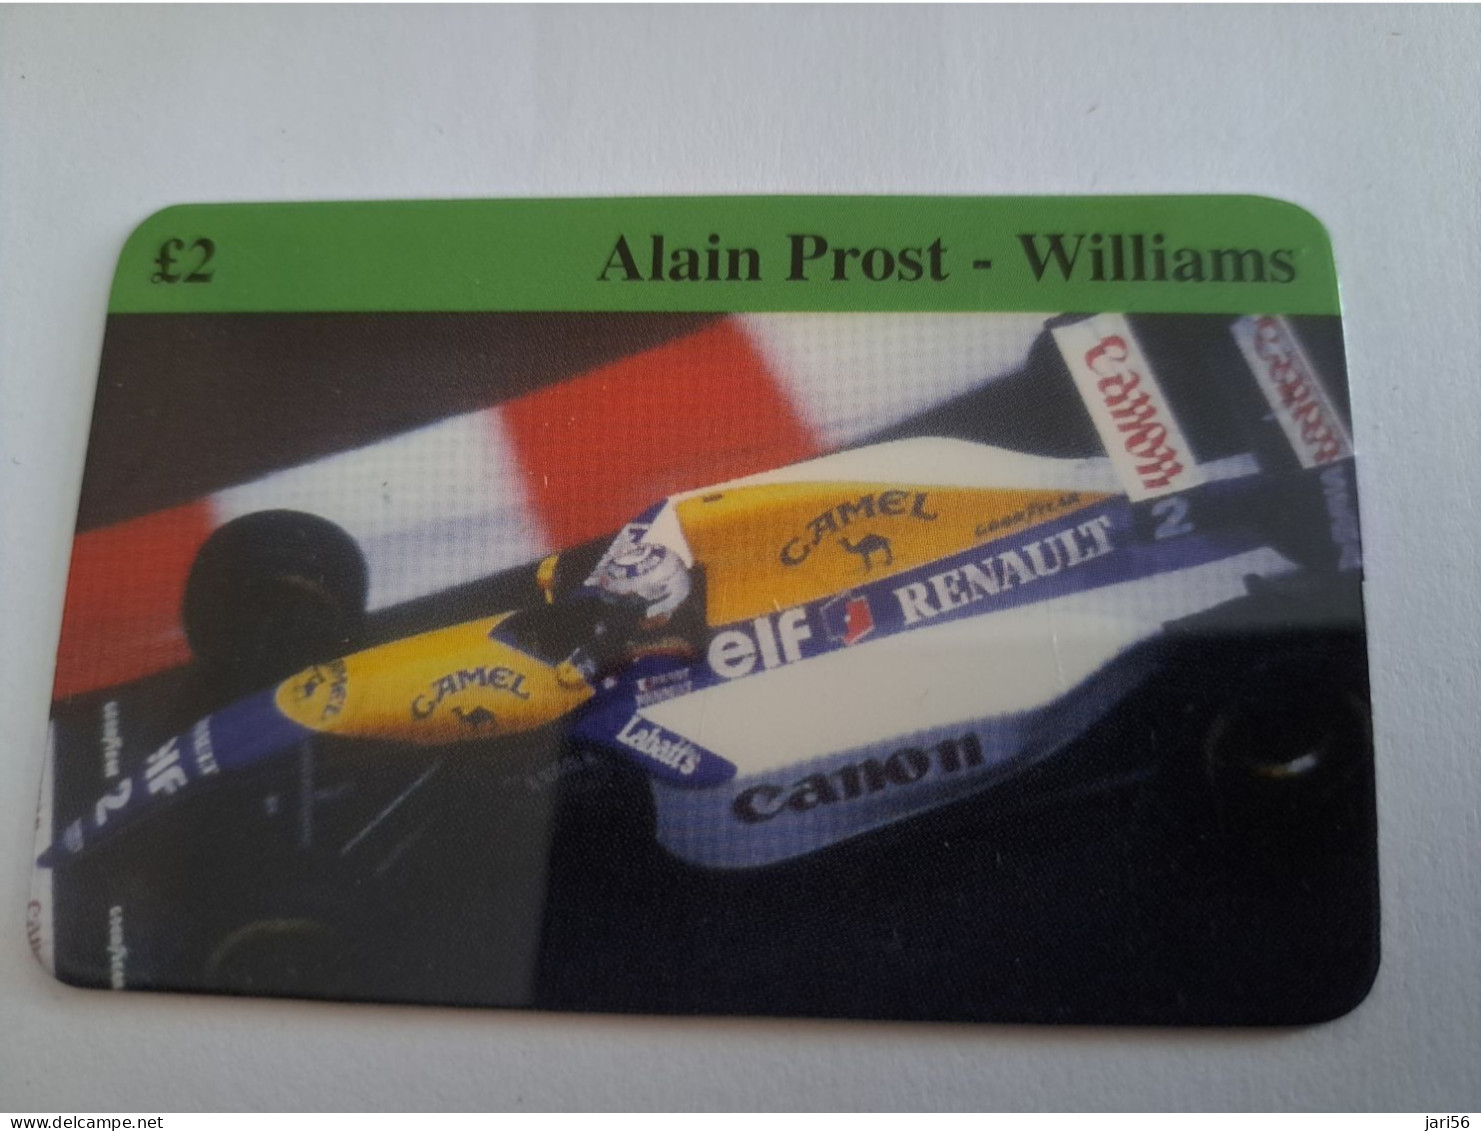 GREAT BRITAIN / 2 POUND  / RACE CAR/  ALAN PROST - WILLIAMS    /    PREPAID CARD/ USED   **15715** - [10] Sammlungen